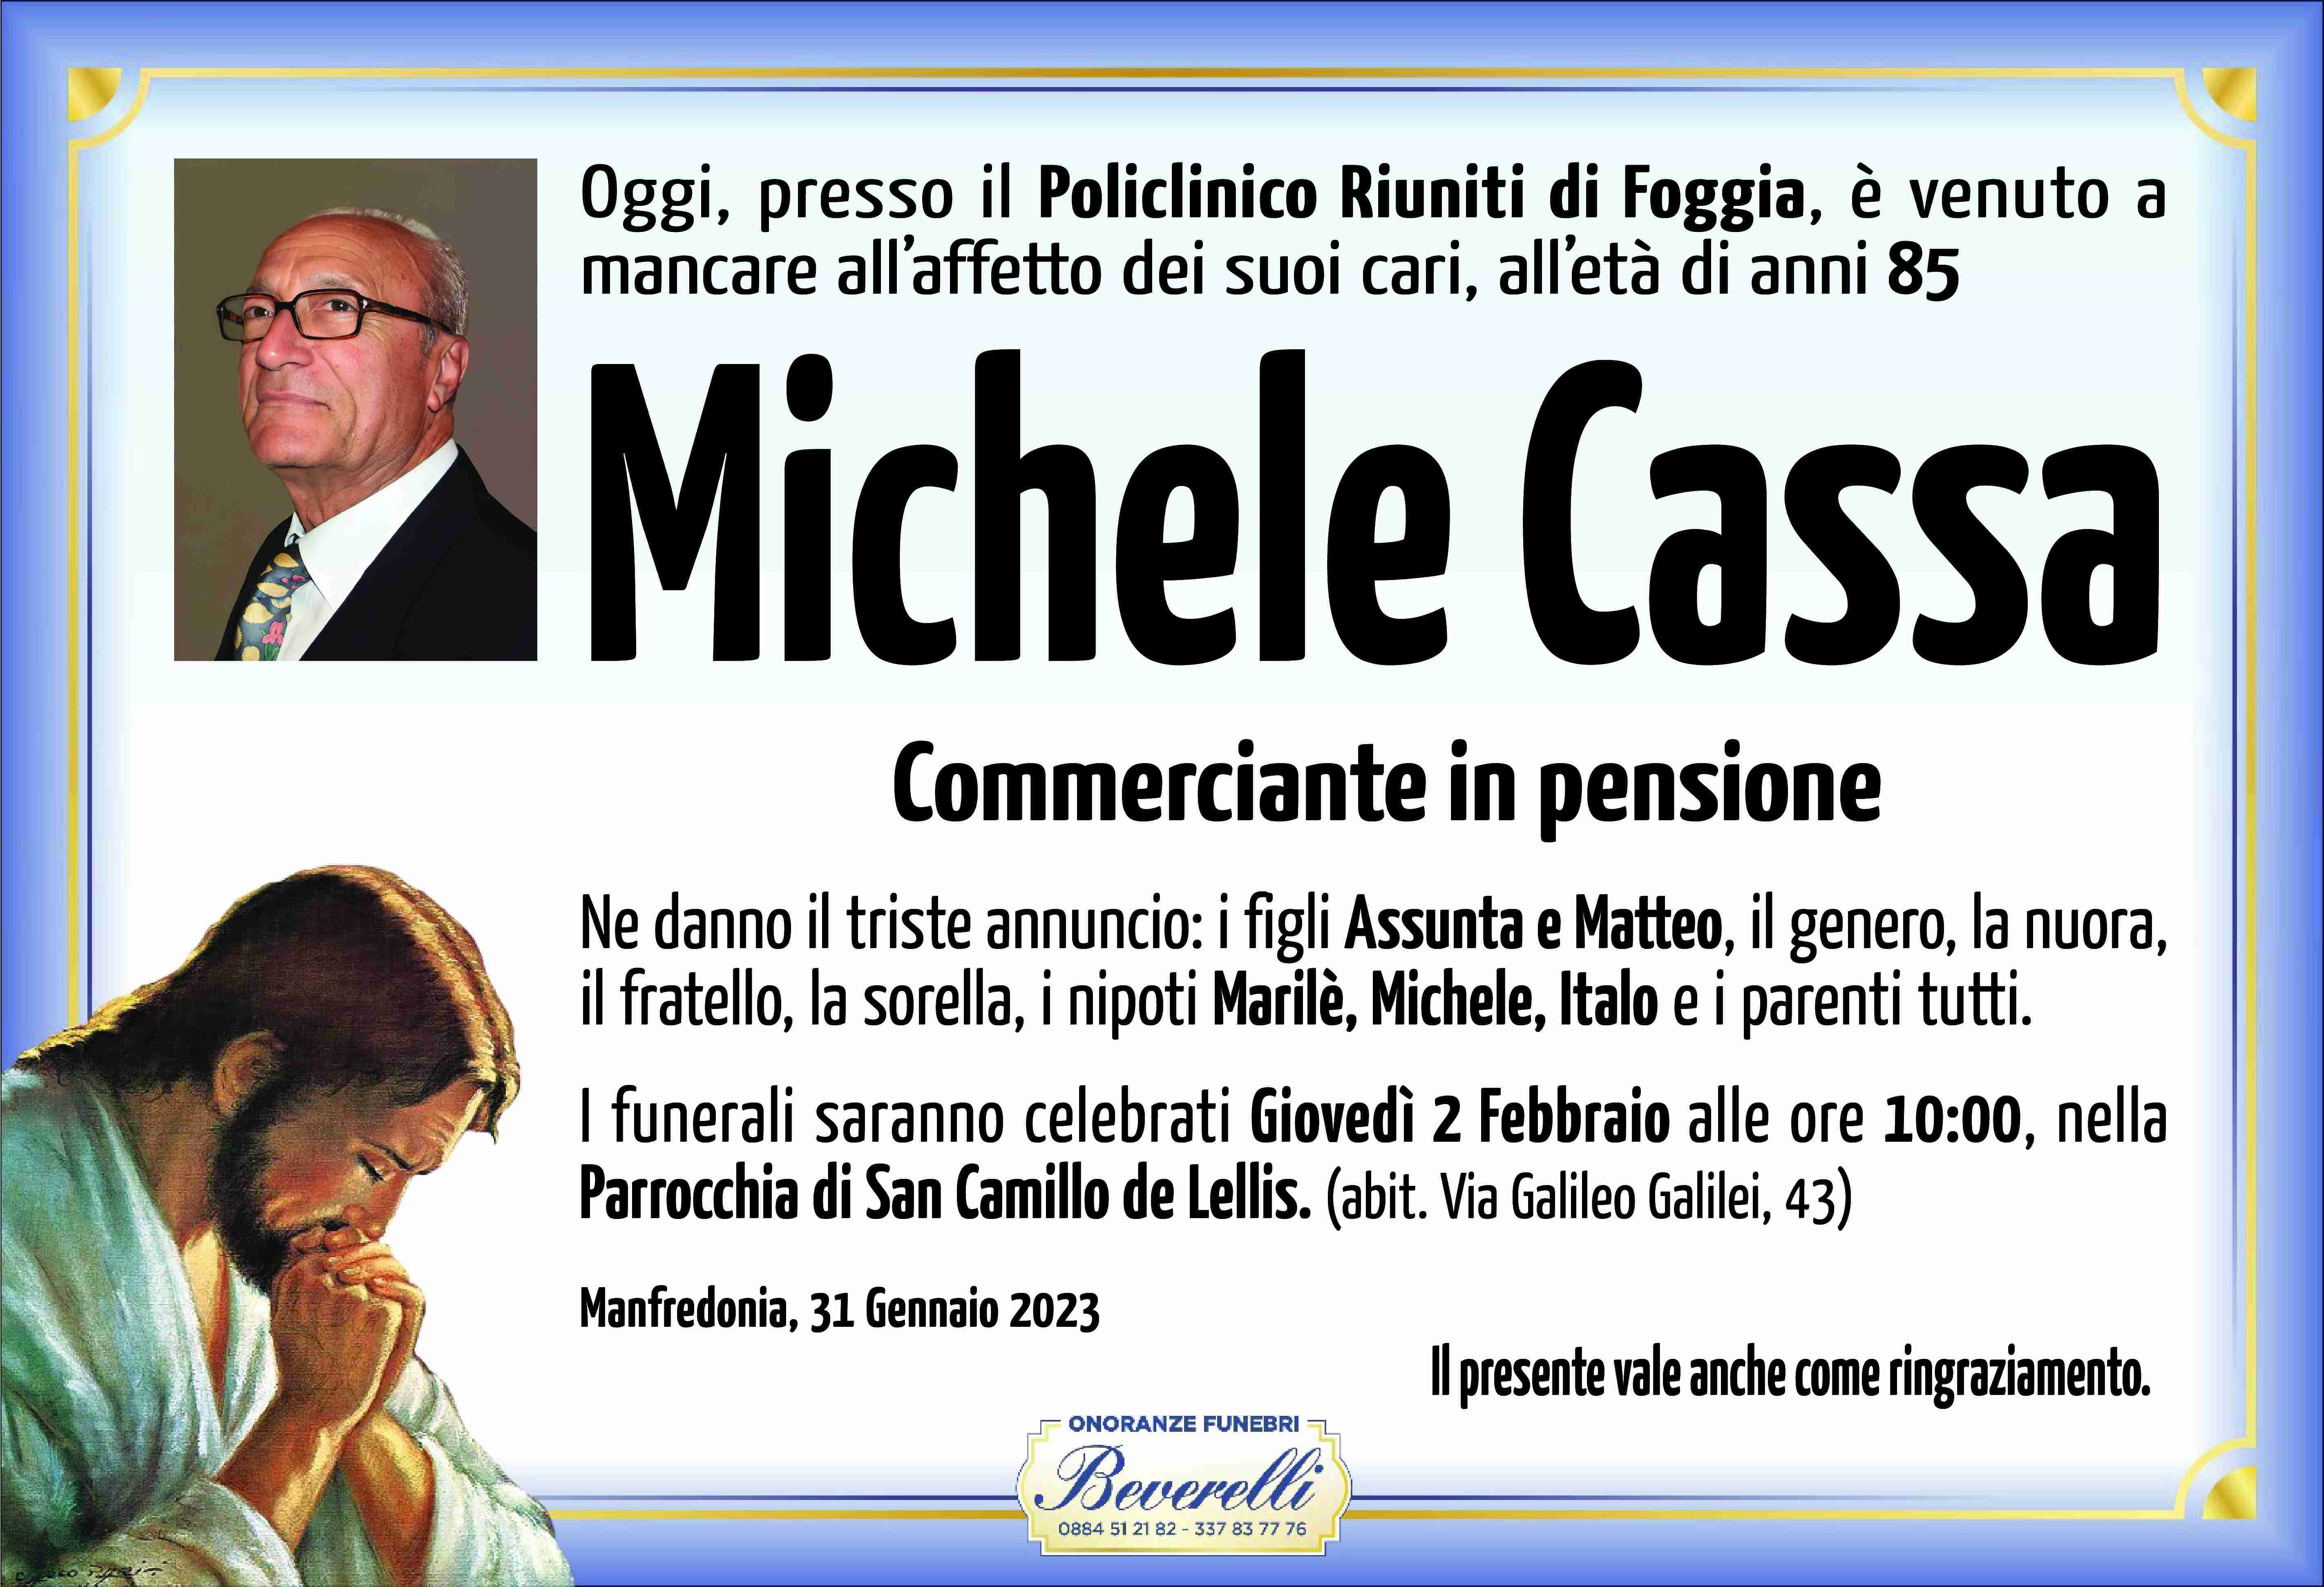 Michele Cassa